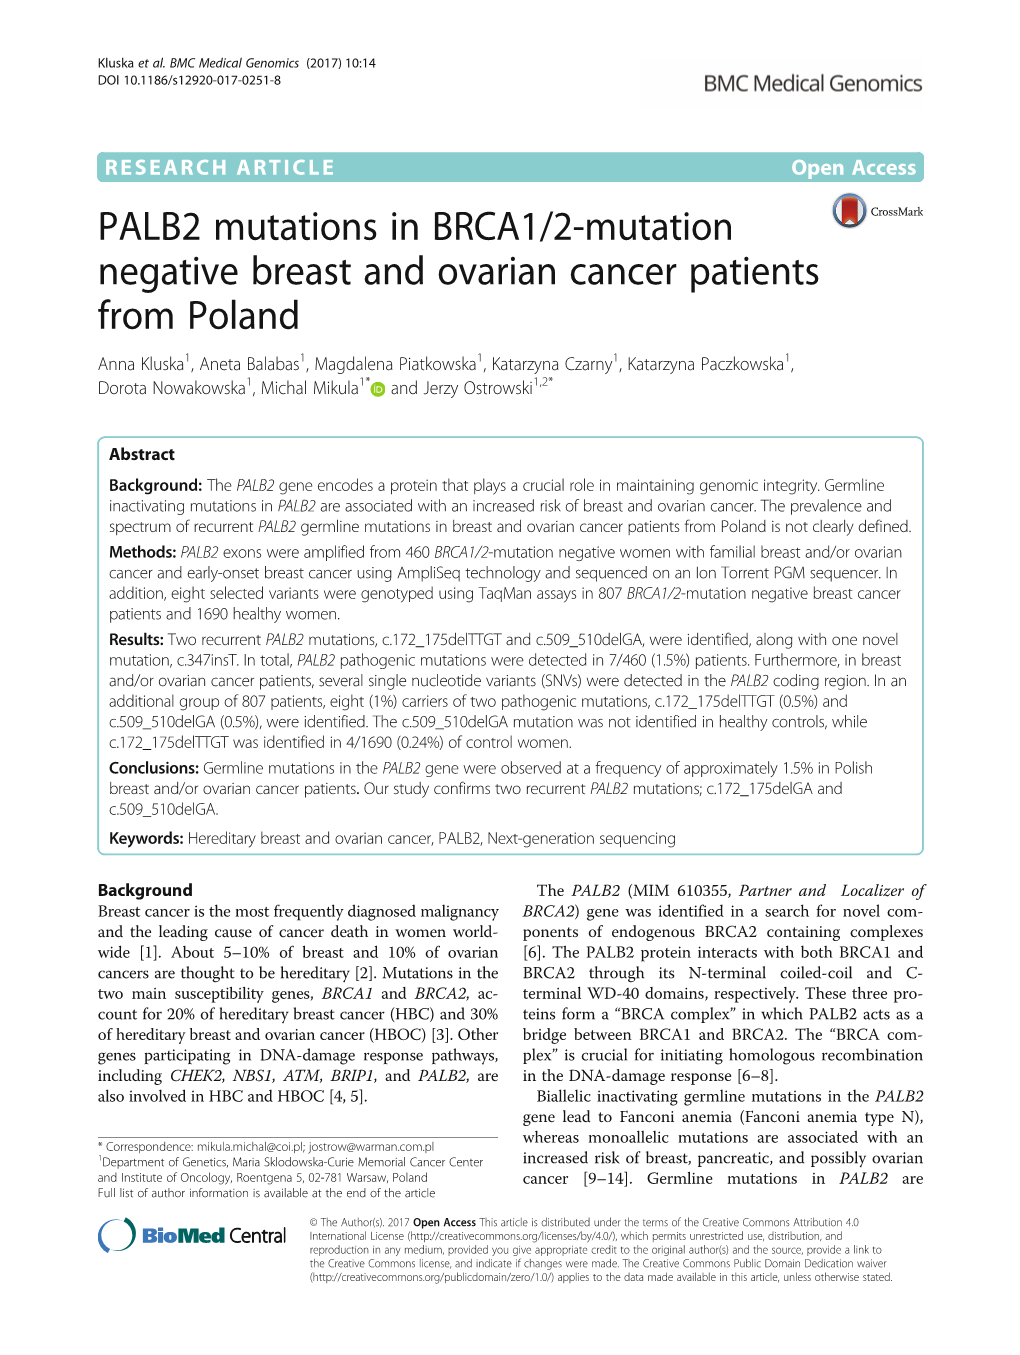 PALB2 Mutations in BRCA1/2-Mutation Negative Breast